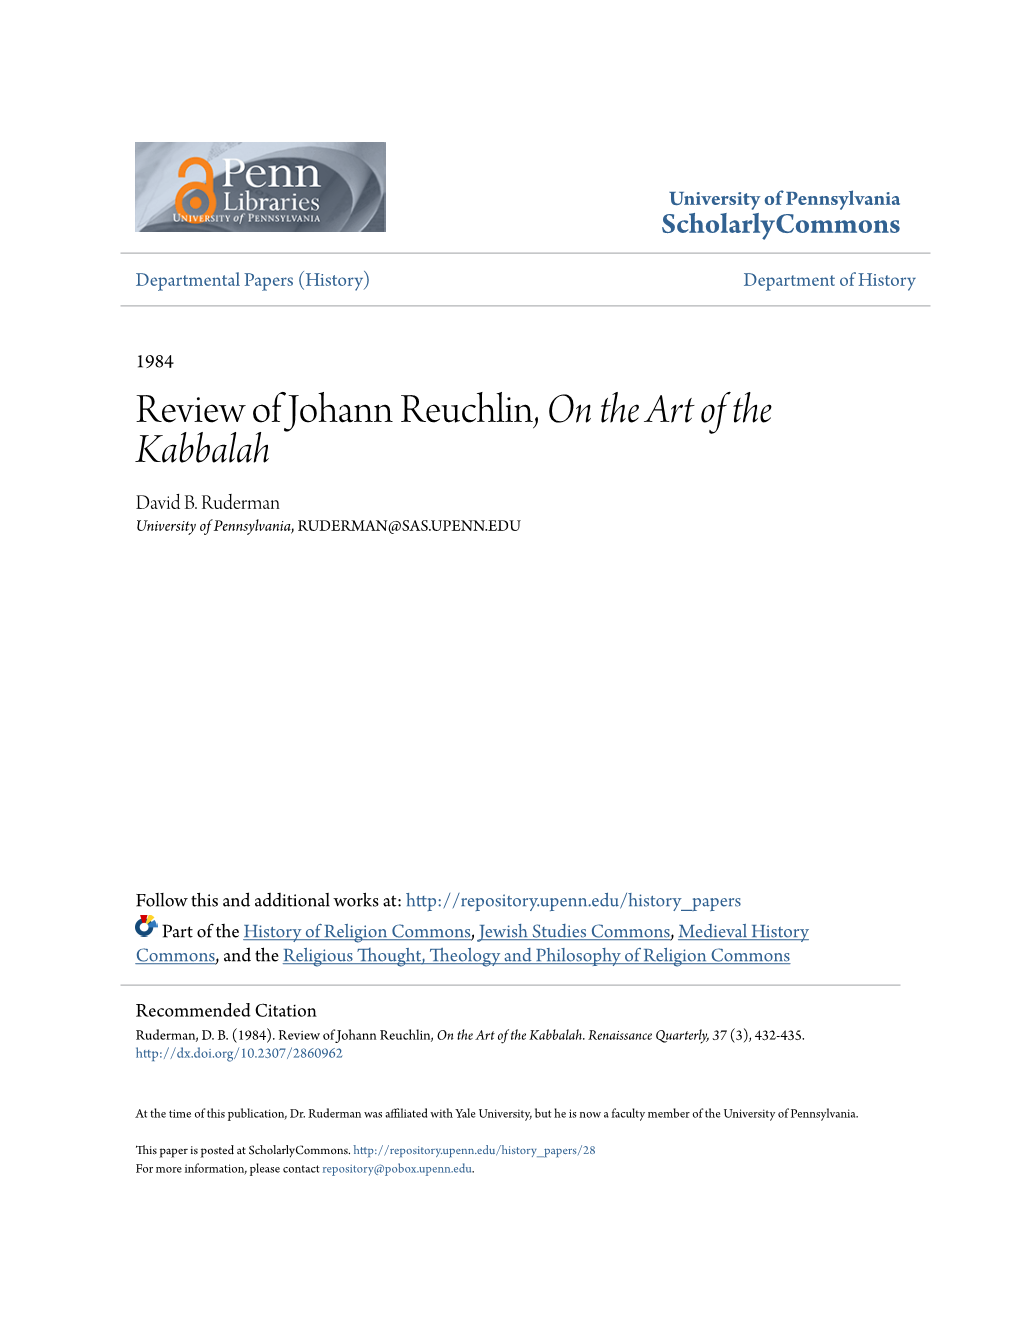 Review of Johann Reuchlin, on the Art of the Kabbalah David B